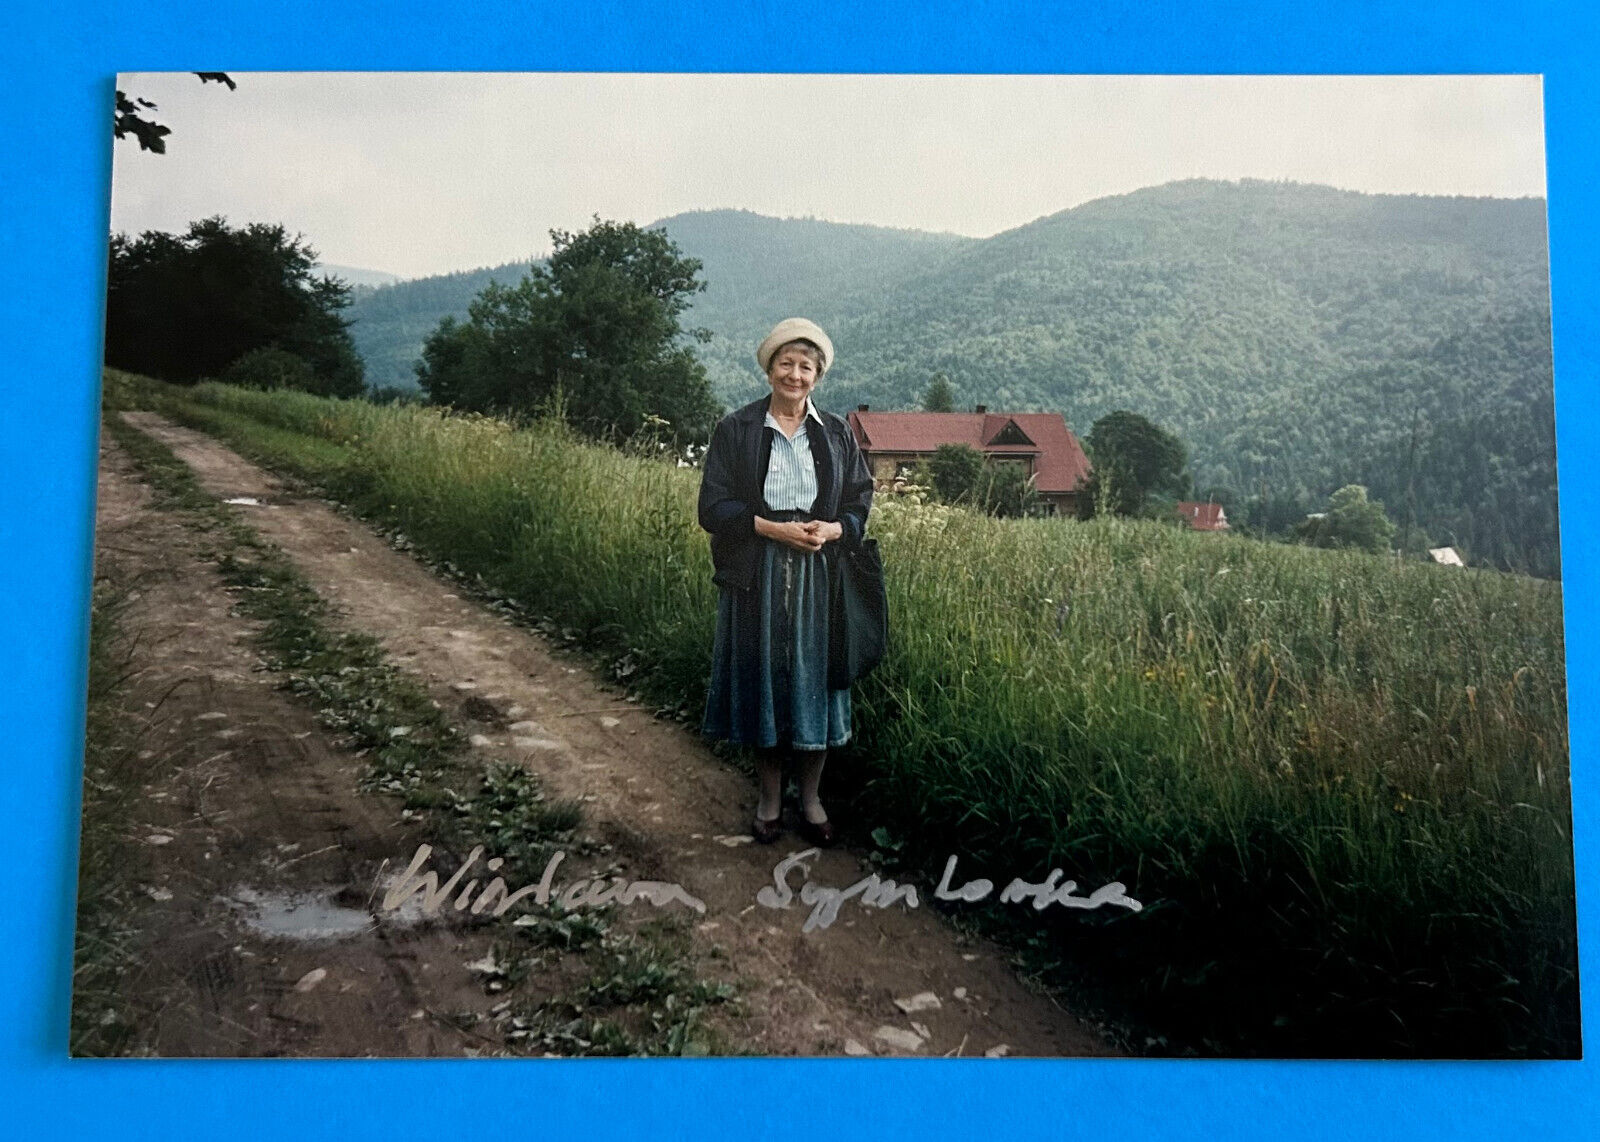 Wisława Szymborska (Nobel Prize Literature 1996) Hand Autographed Signed Photo